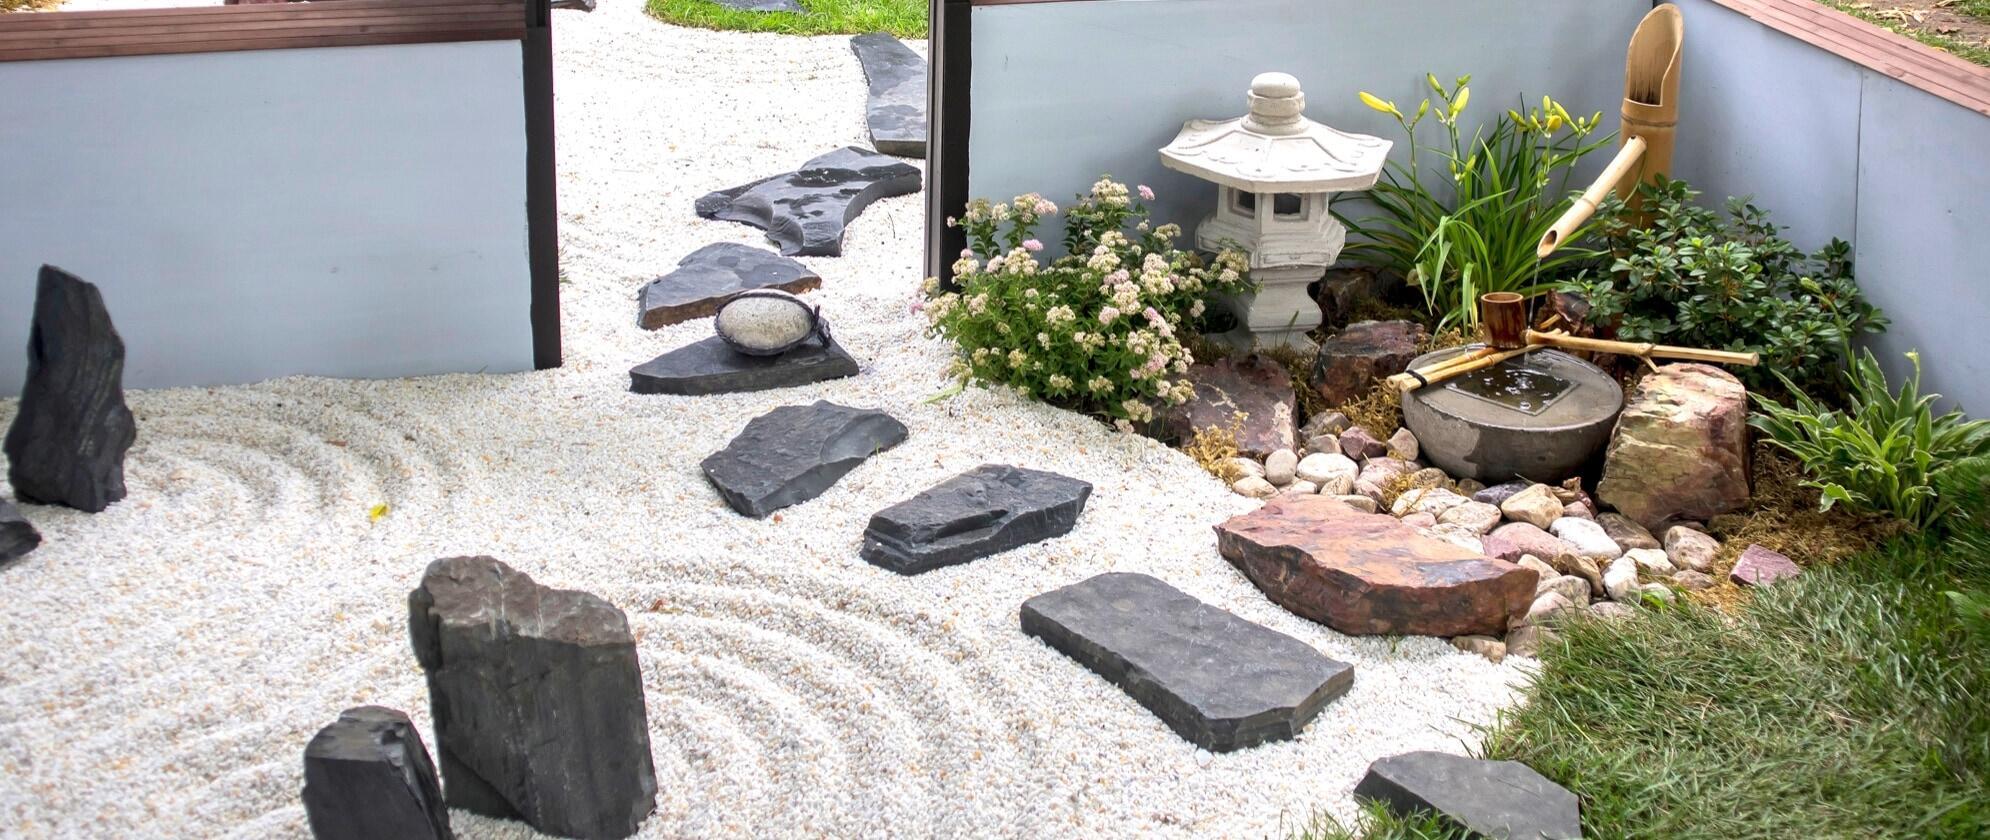 Giardino zen: armonia green dentro e fuori casa